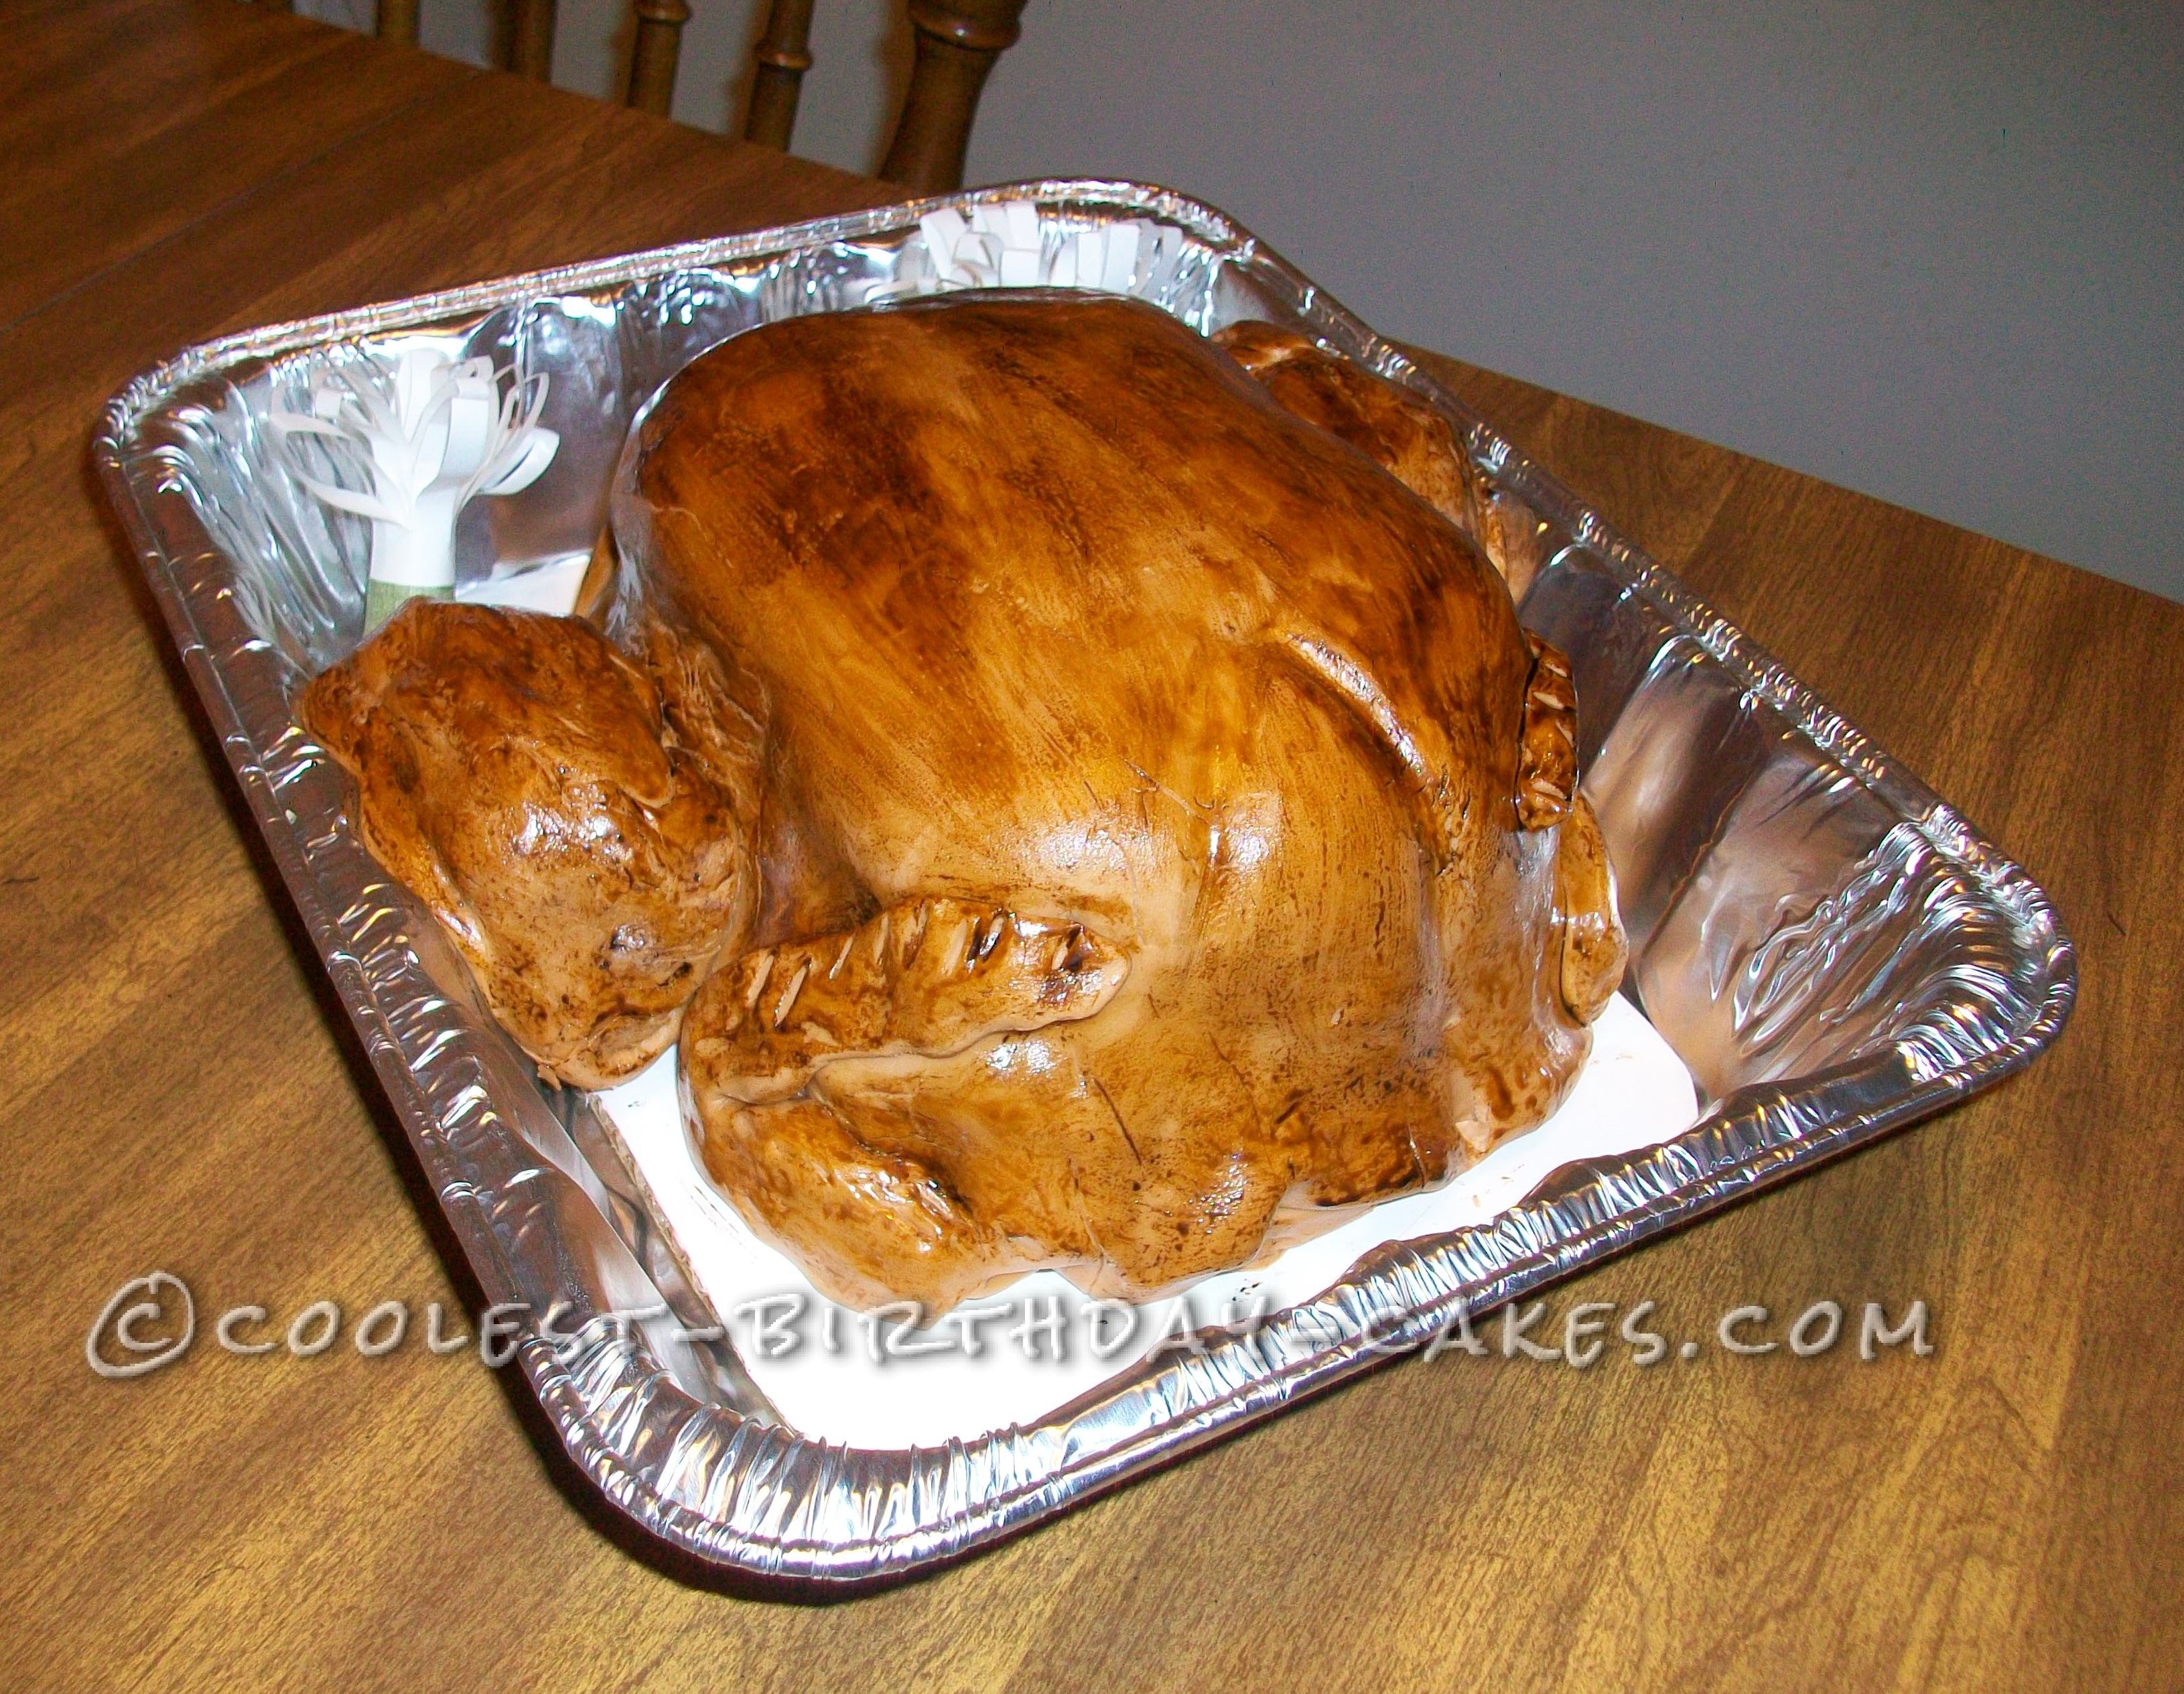 Coolest Turkey Cake